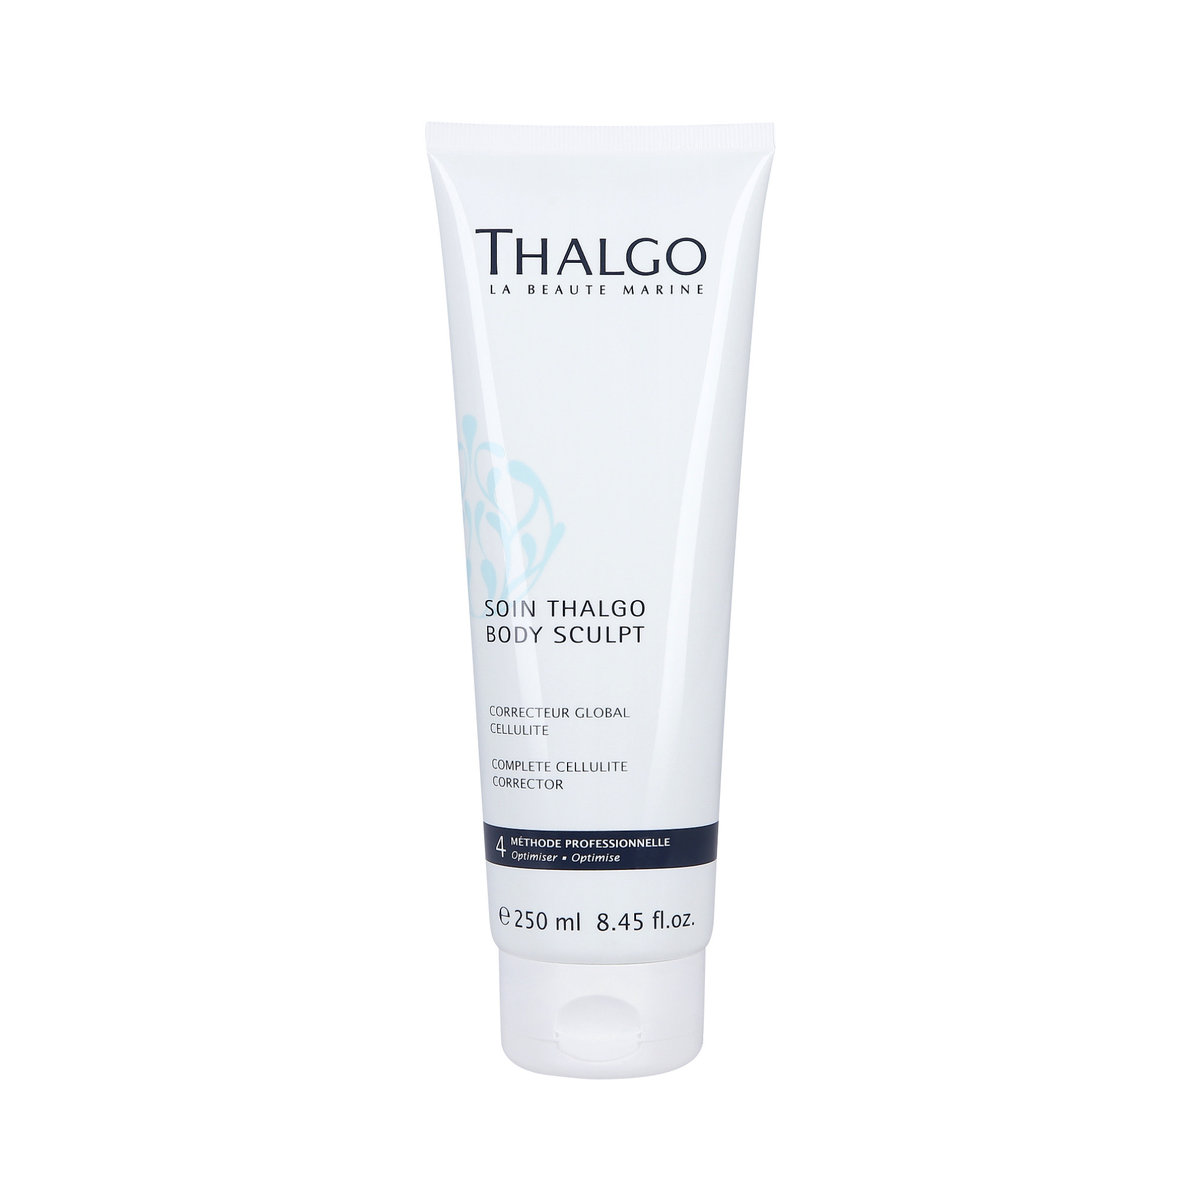 Thalgo Body Sculpt Complete Cellulite Corrector cellulit i rozstępy 250 ml dla kobiet